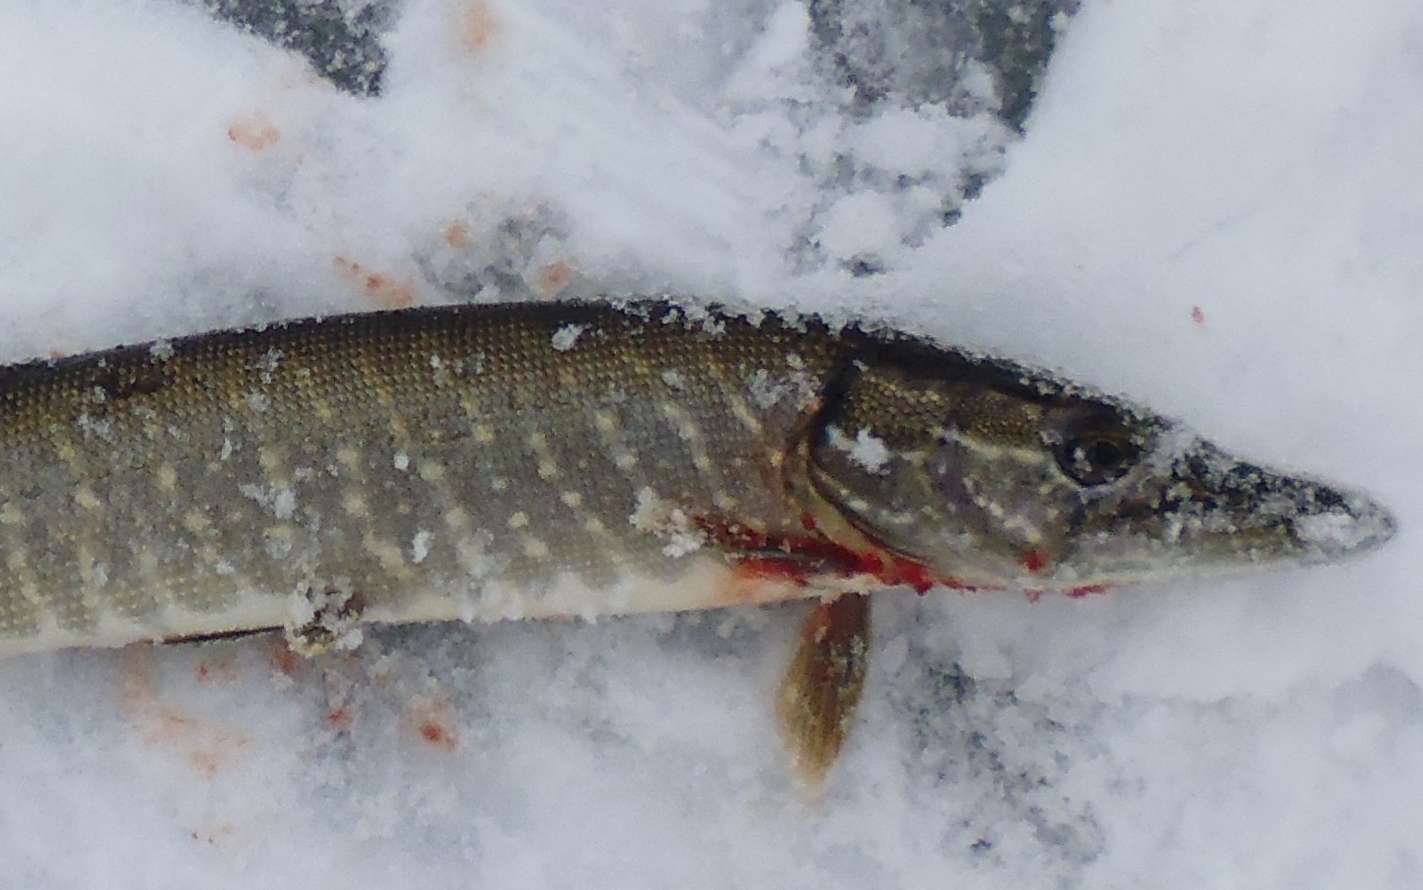 Зимняя рыбалка на щуку - сезон, снасти, советы